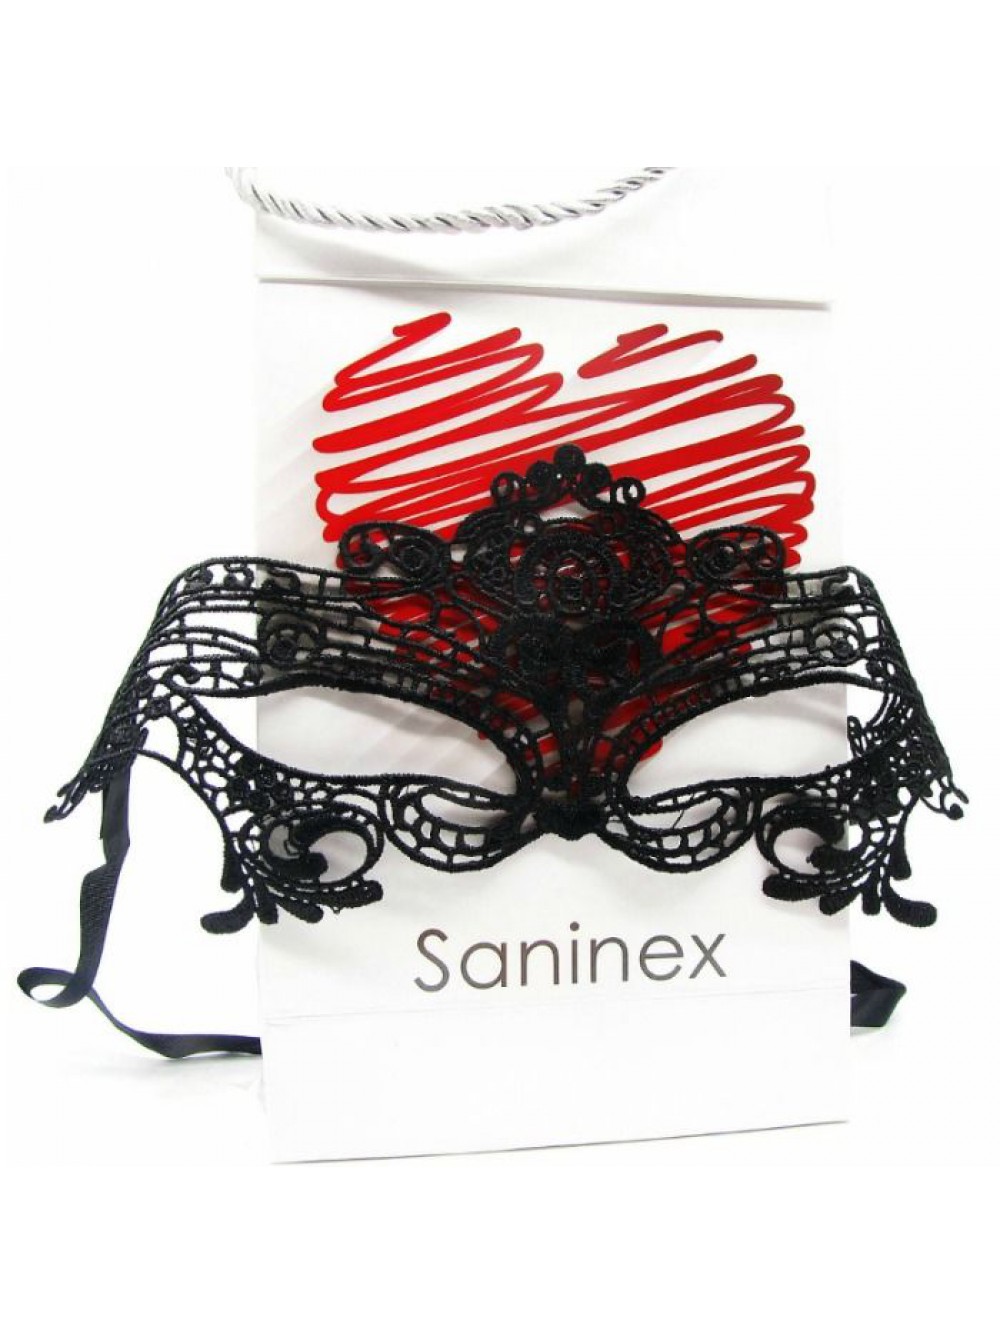 SANINEX Mascara Exciting Experience